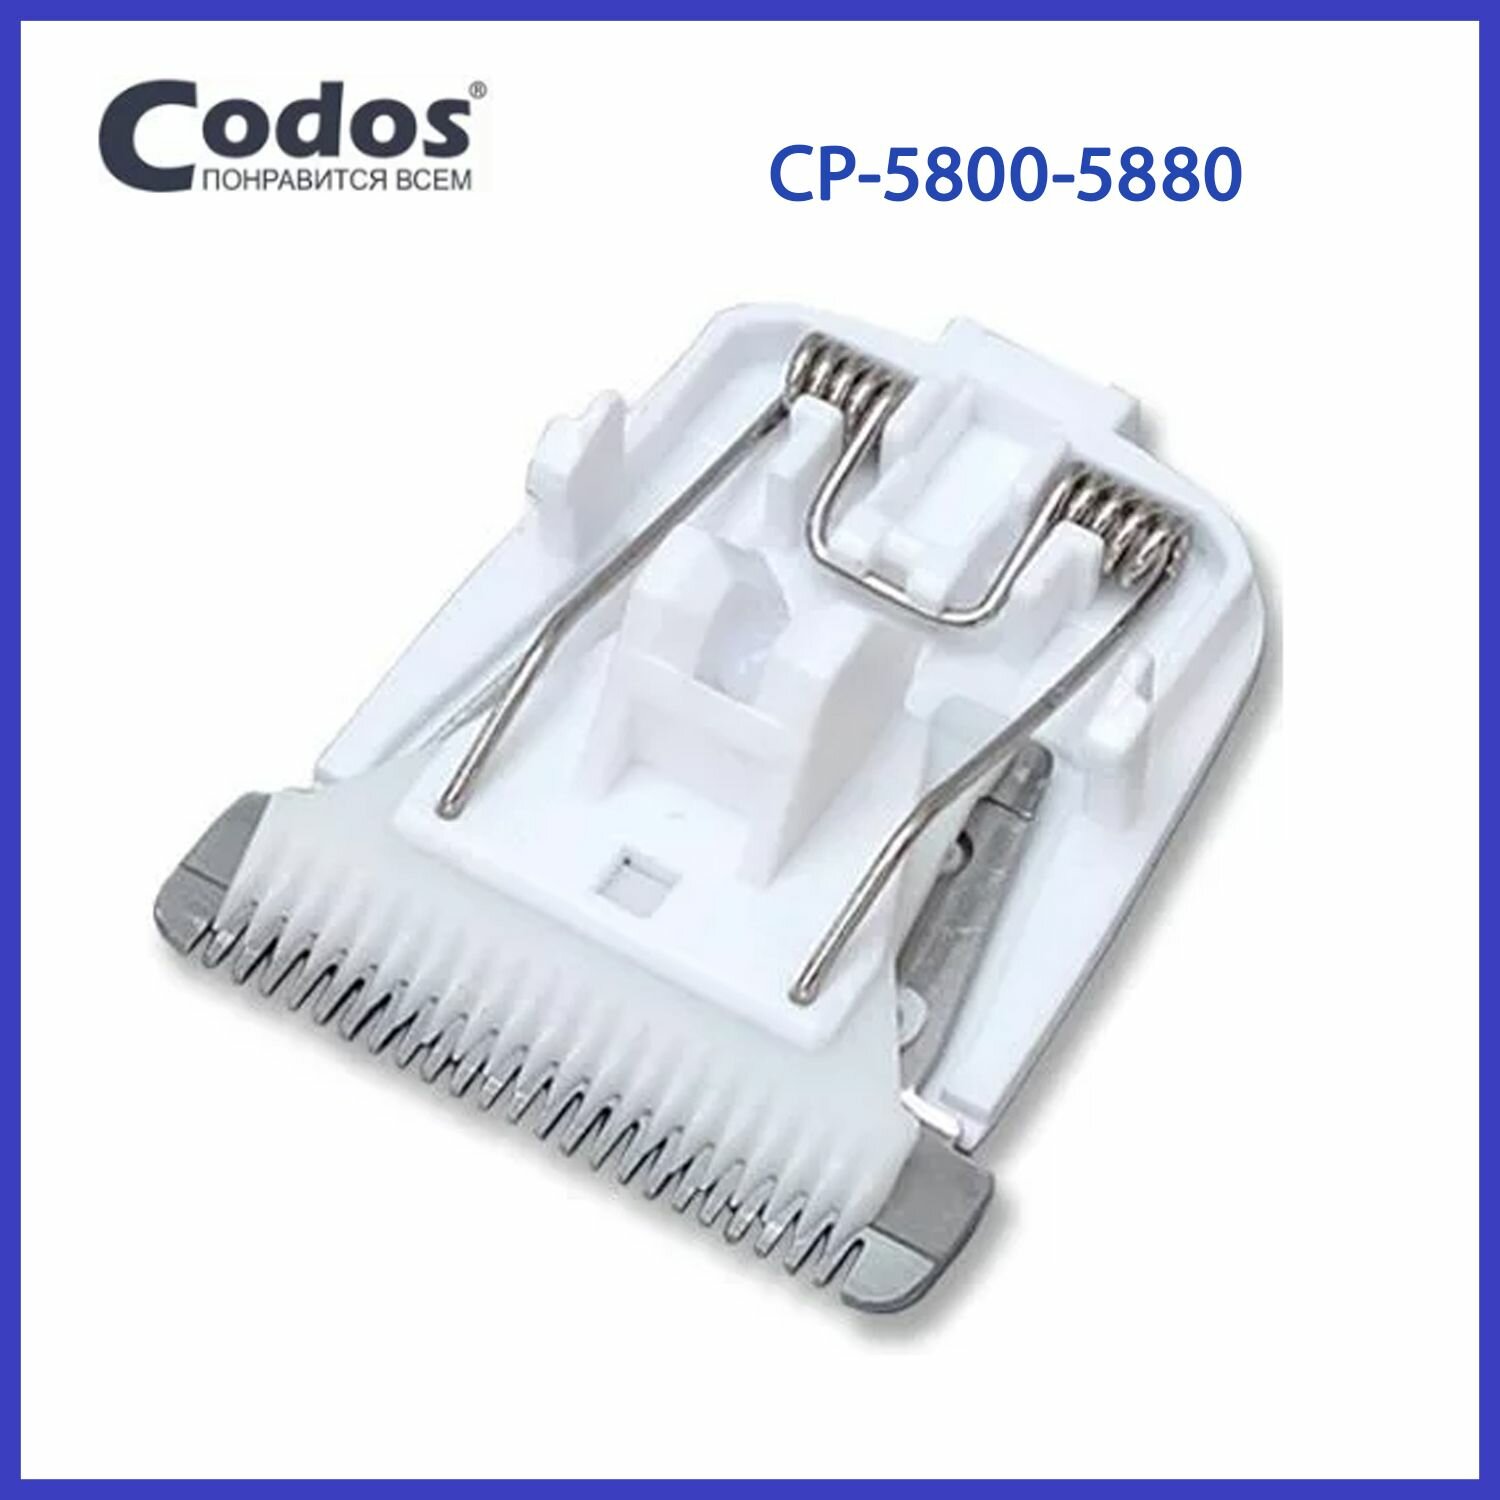 Нож Codos 0,8мм CP-5800-5880